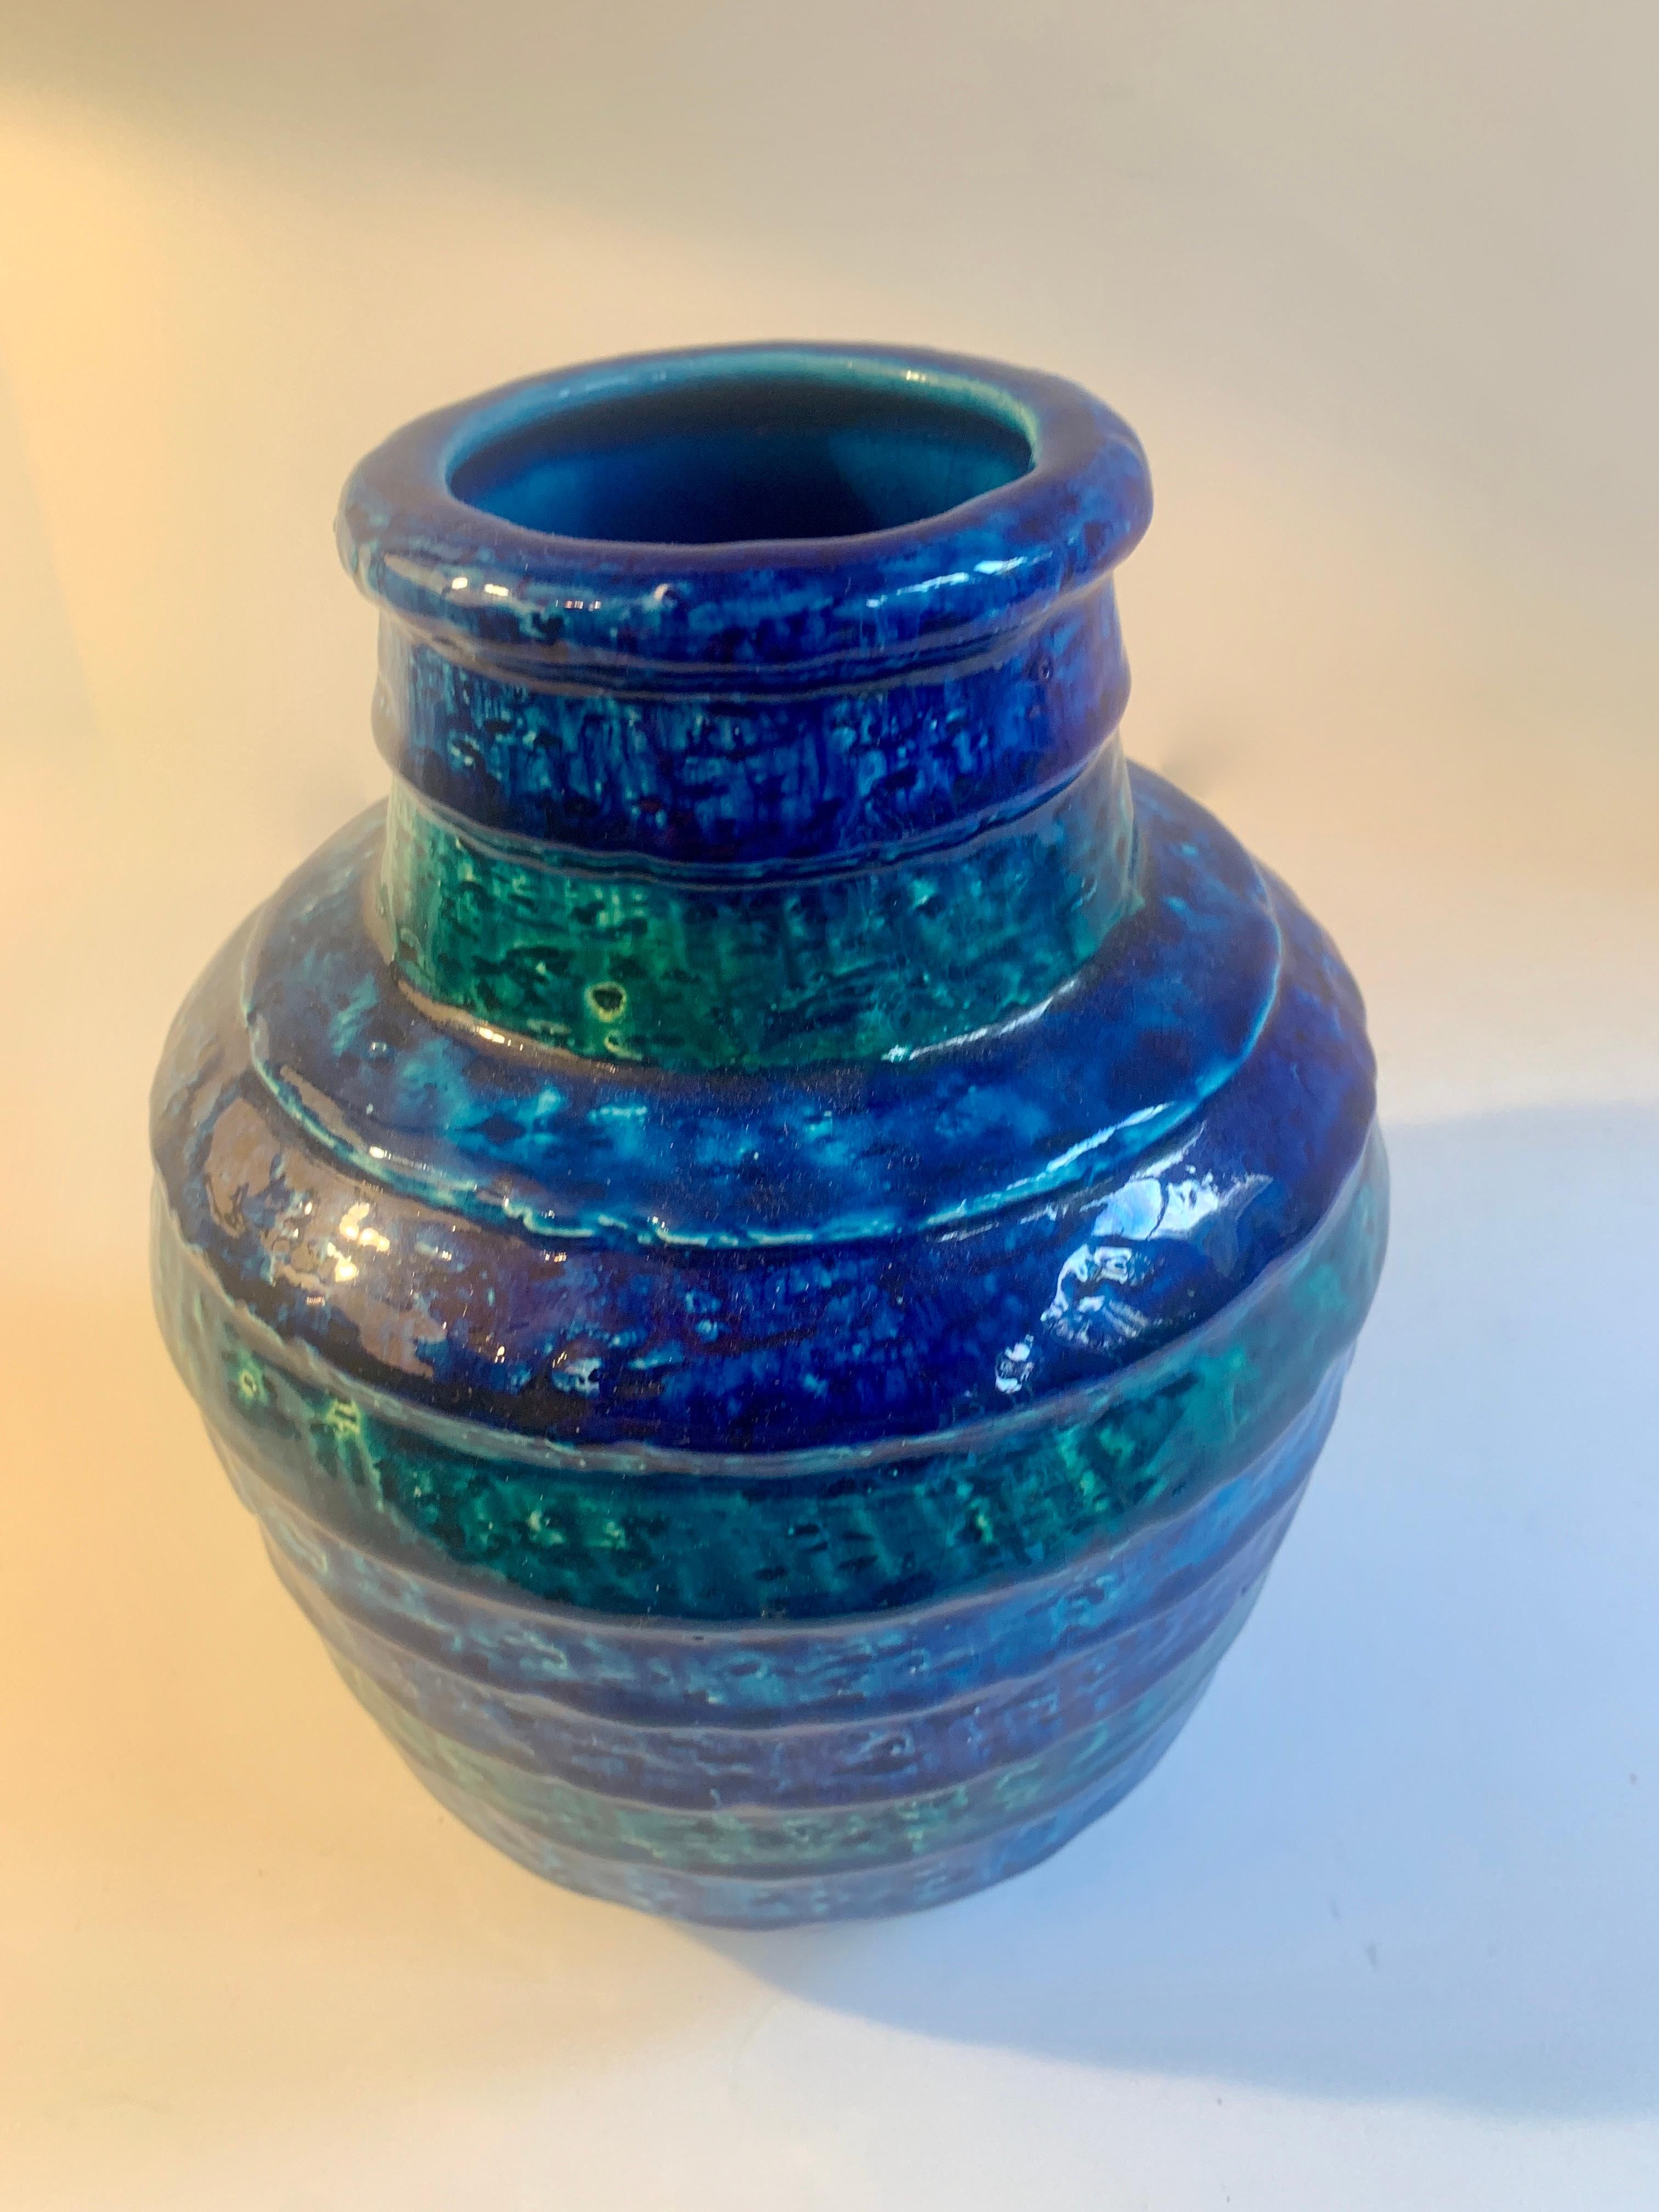 Mid-Century Modern blue ceramic Rosenthal Netter vase made in Italy - a wonderful glazed pottery piece as well as lovely vase.